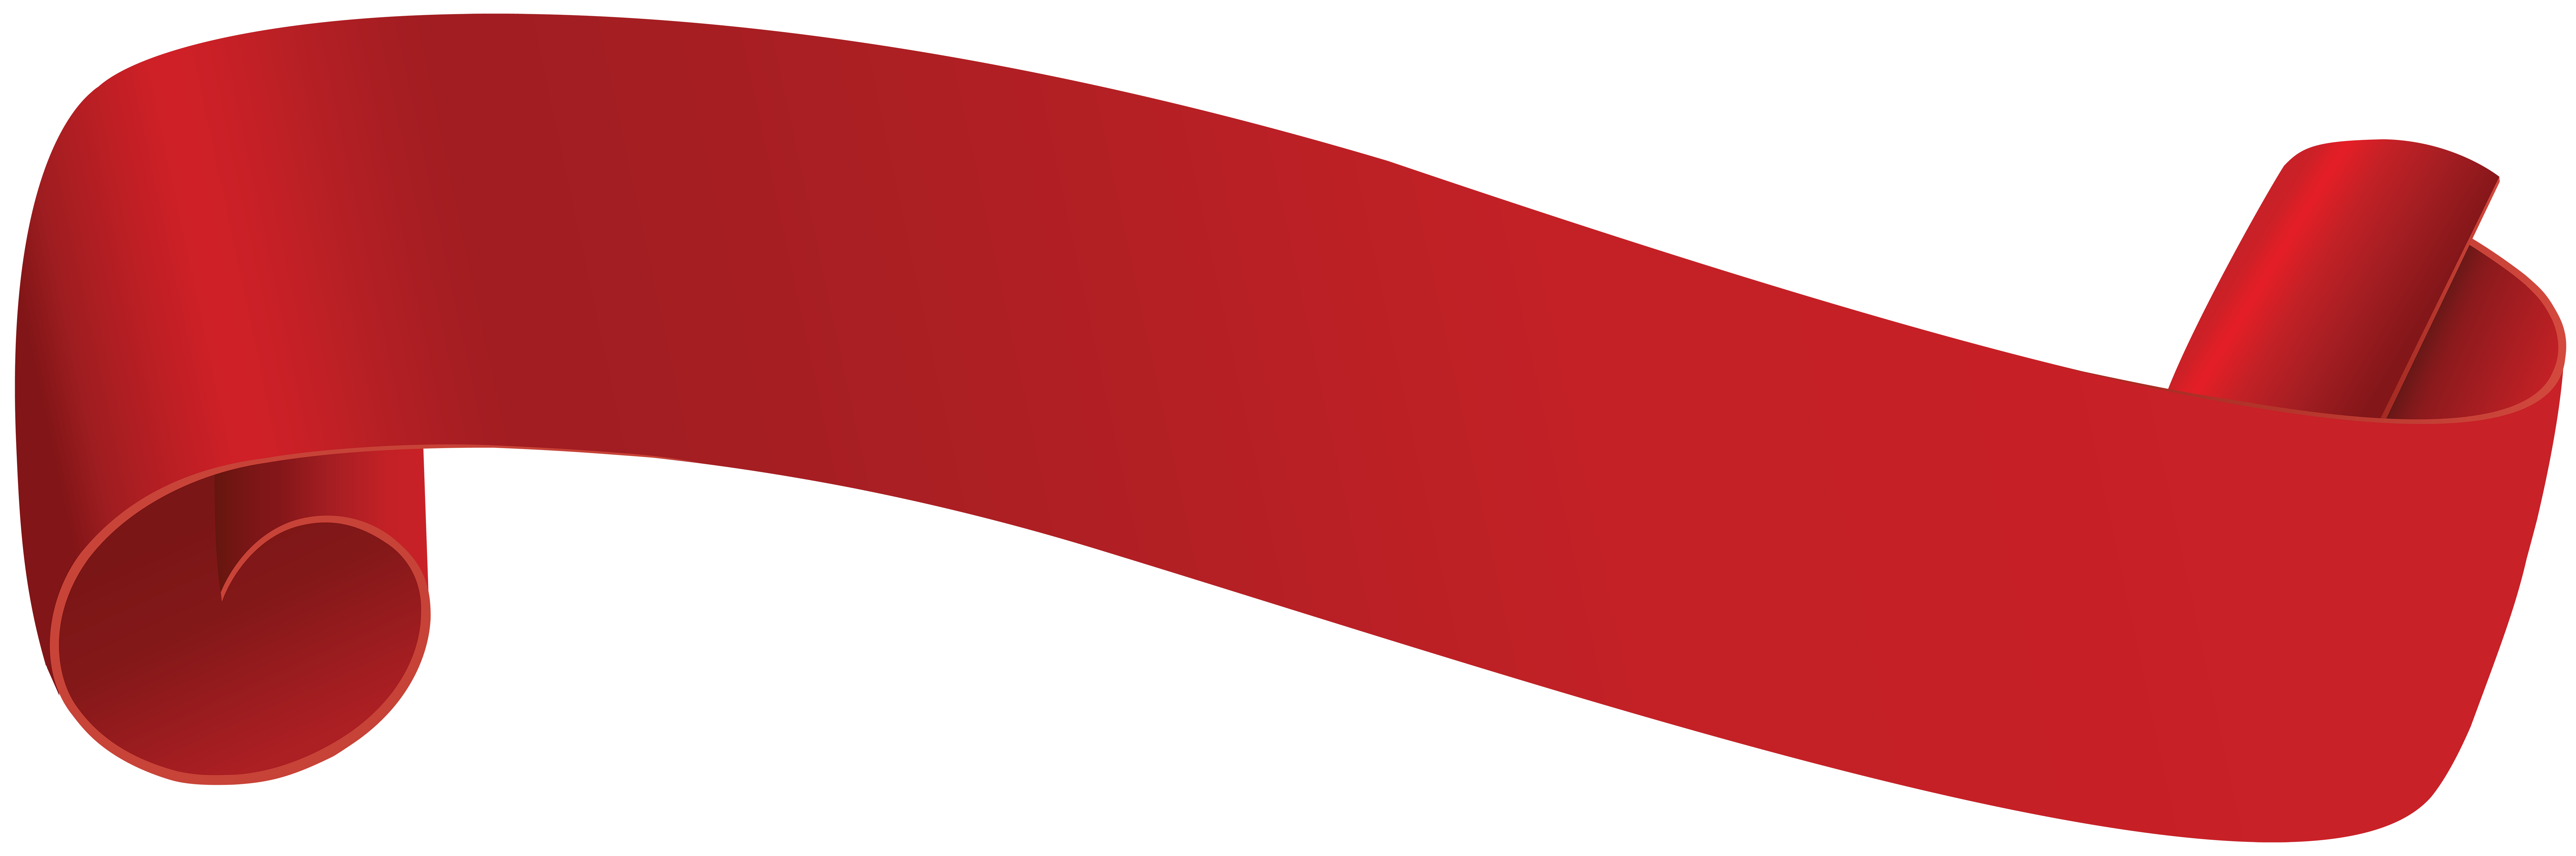 Red banner transparent.